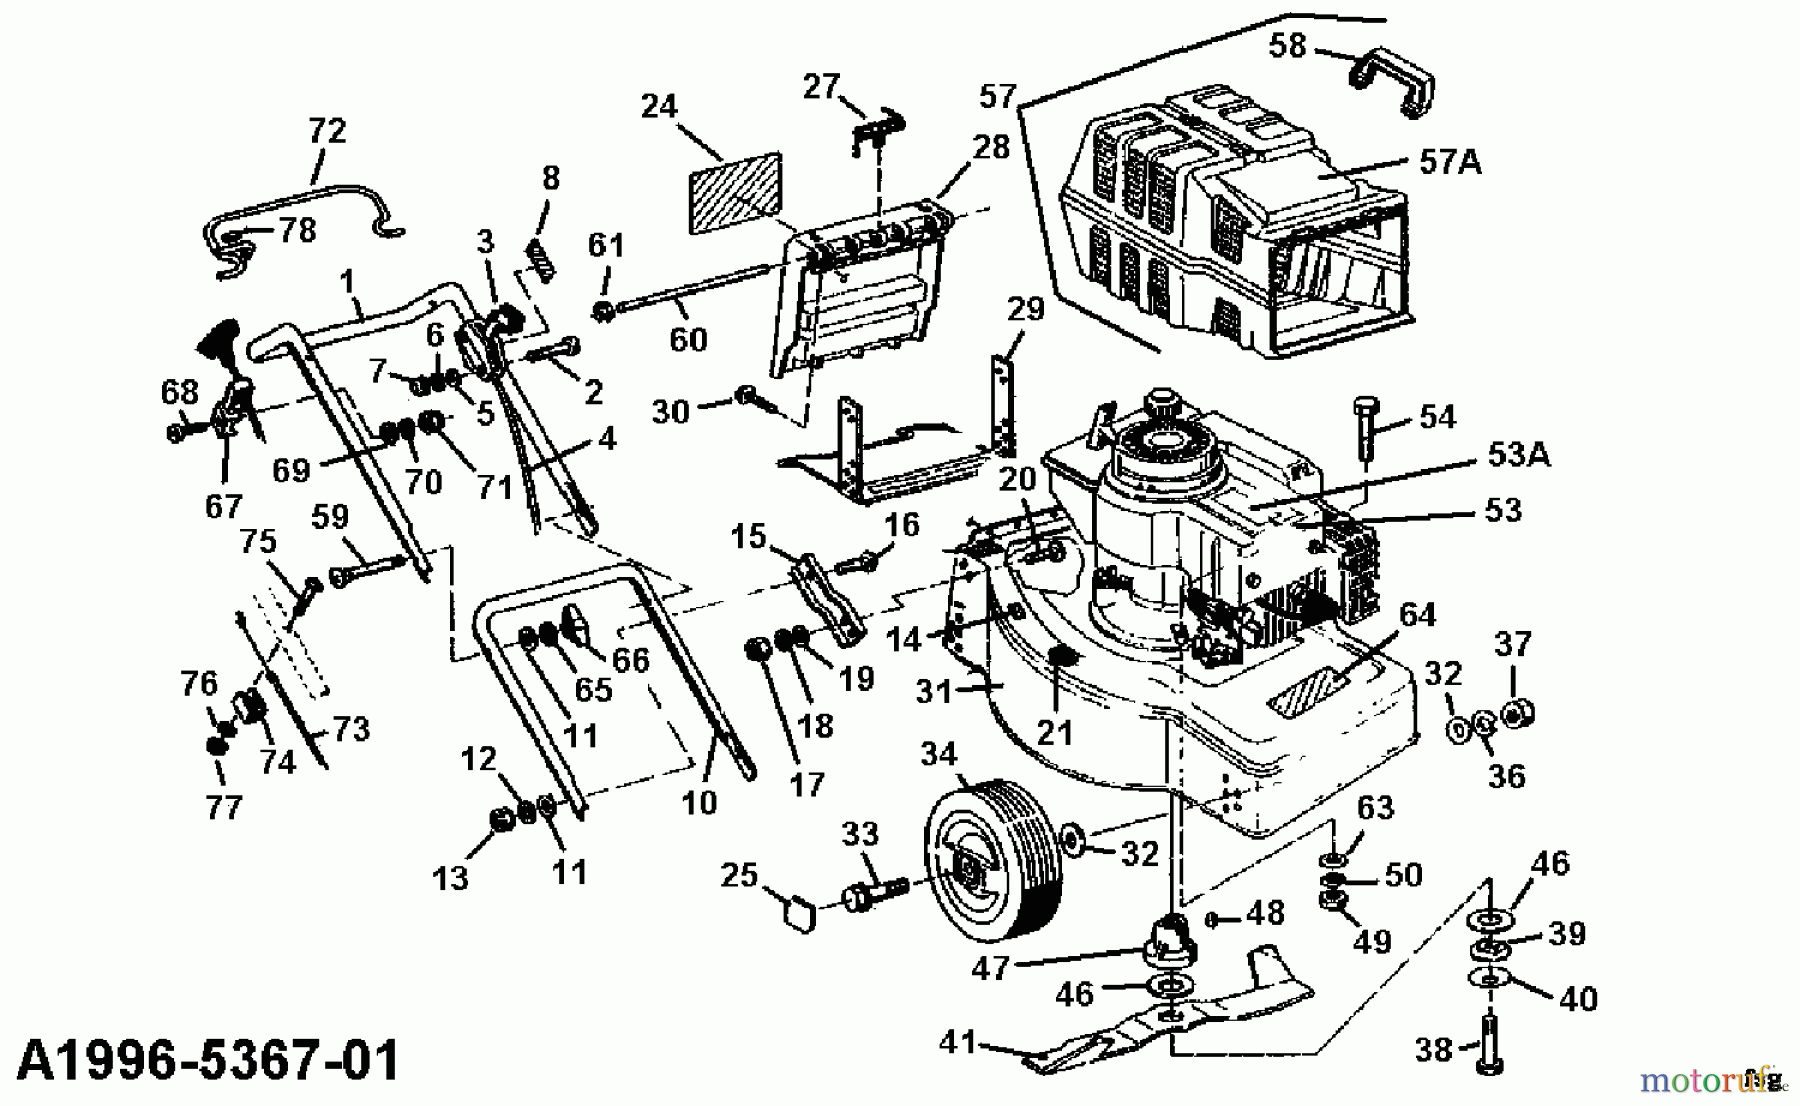  Golf Petrol mower Golf B 04042.02  (1996) Basic machine